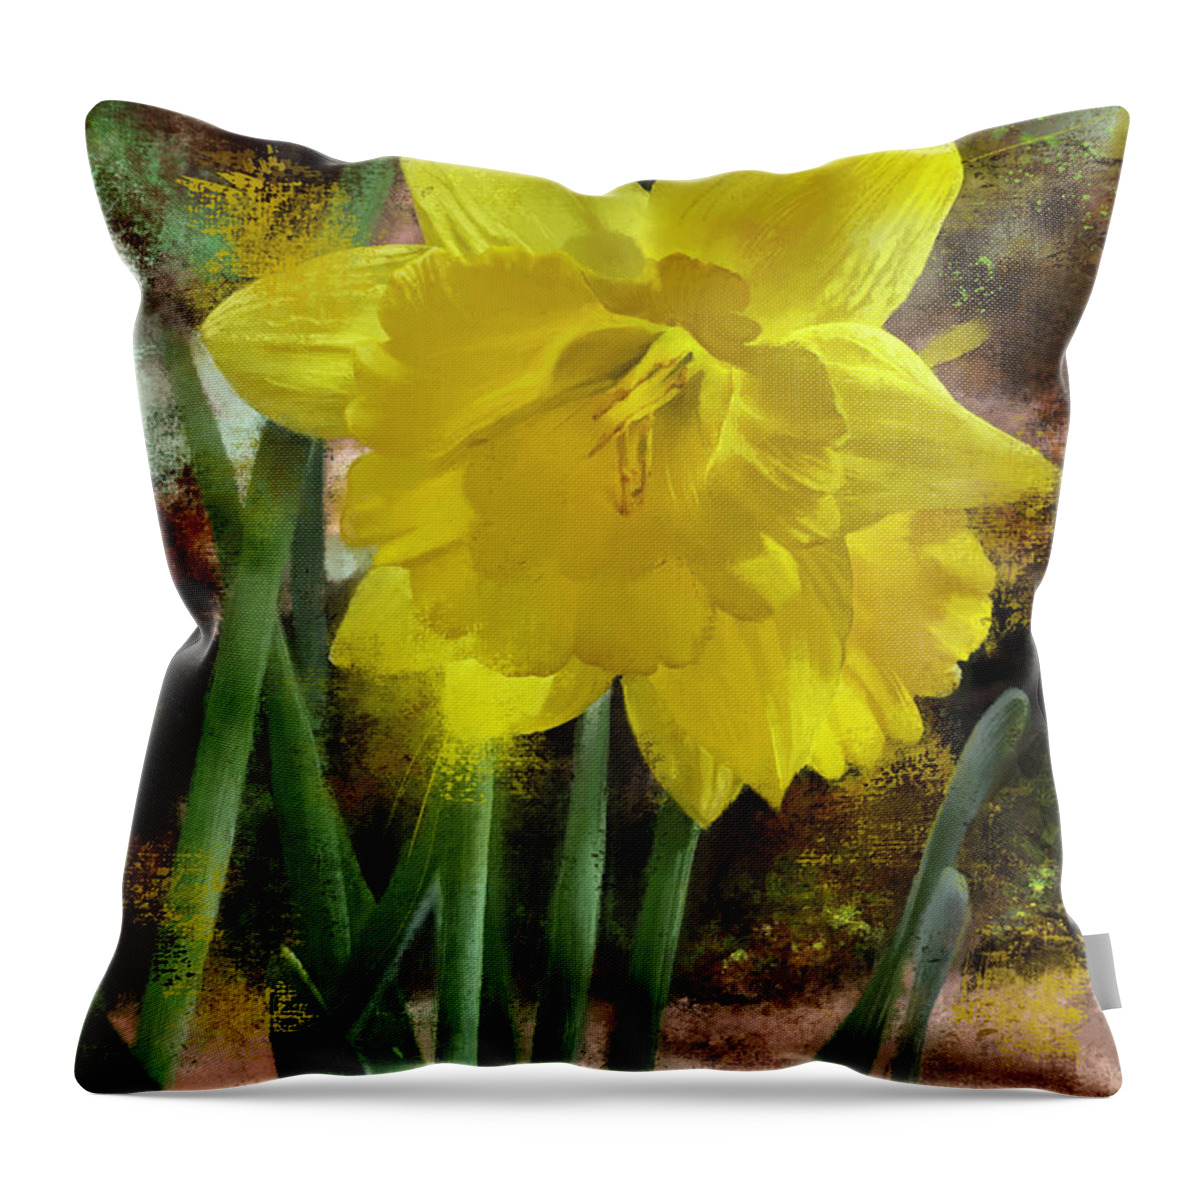 Flower Throw Pillow featuring the digital art Spring Gold by Garth Glazier